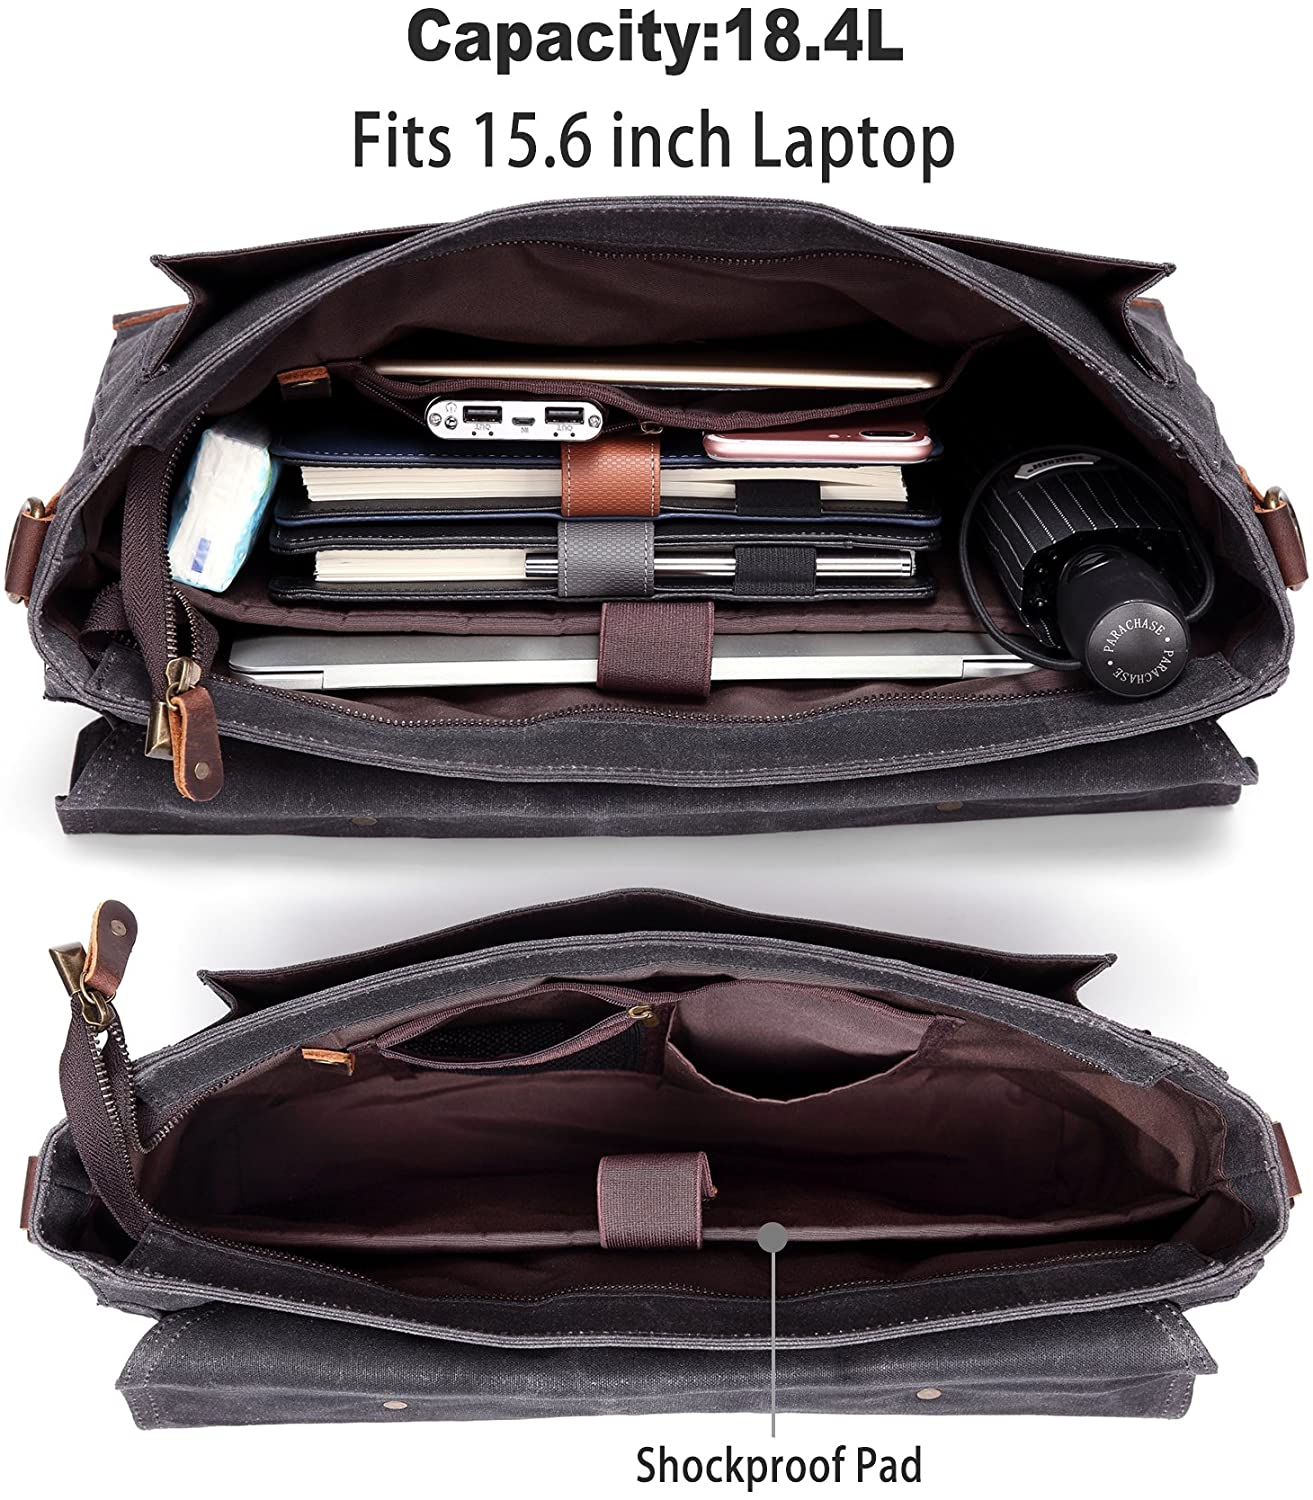 Messenger Bag for Men, Vintage Waxed Canvas Leather Water Resistant 15.6 inch Laptop Satchel Business Briefcase Shoulder Bag Gray